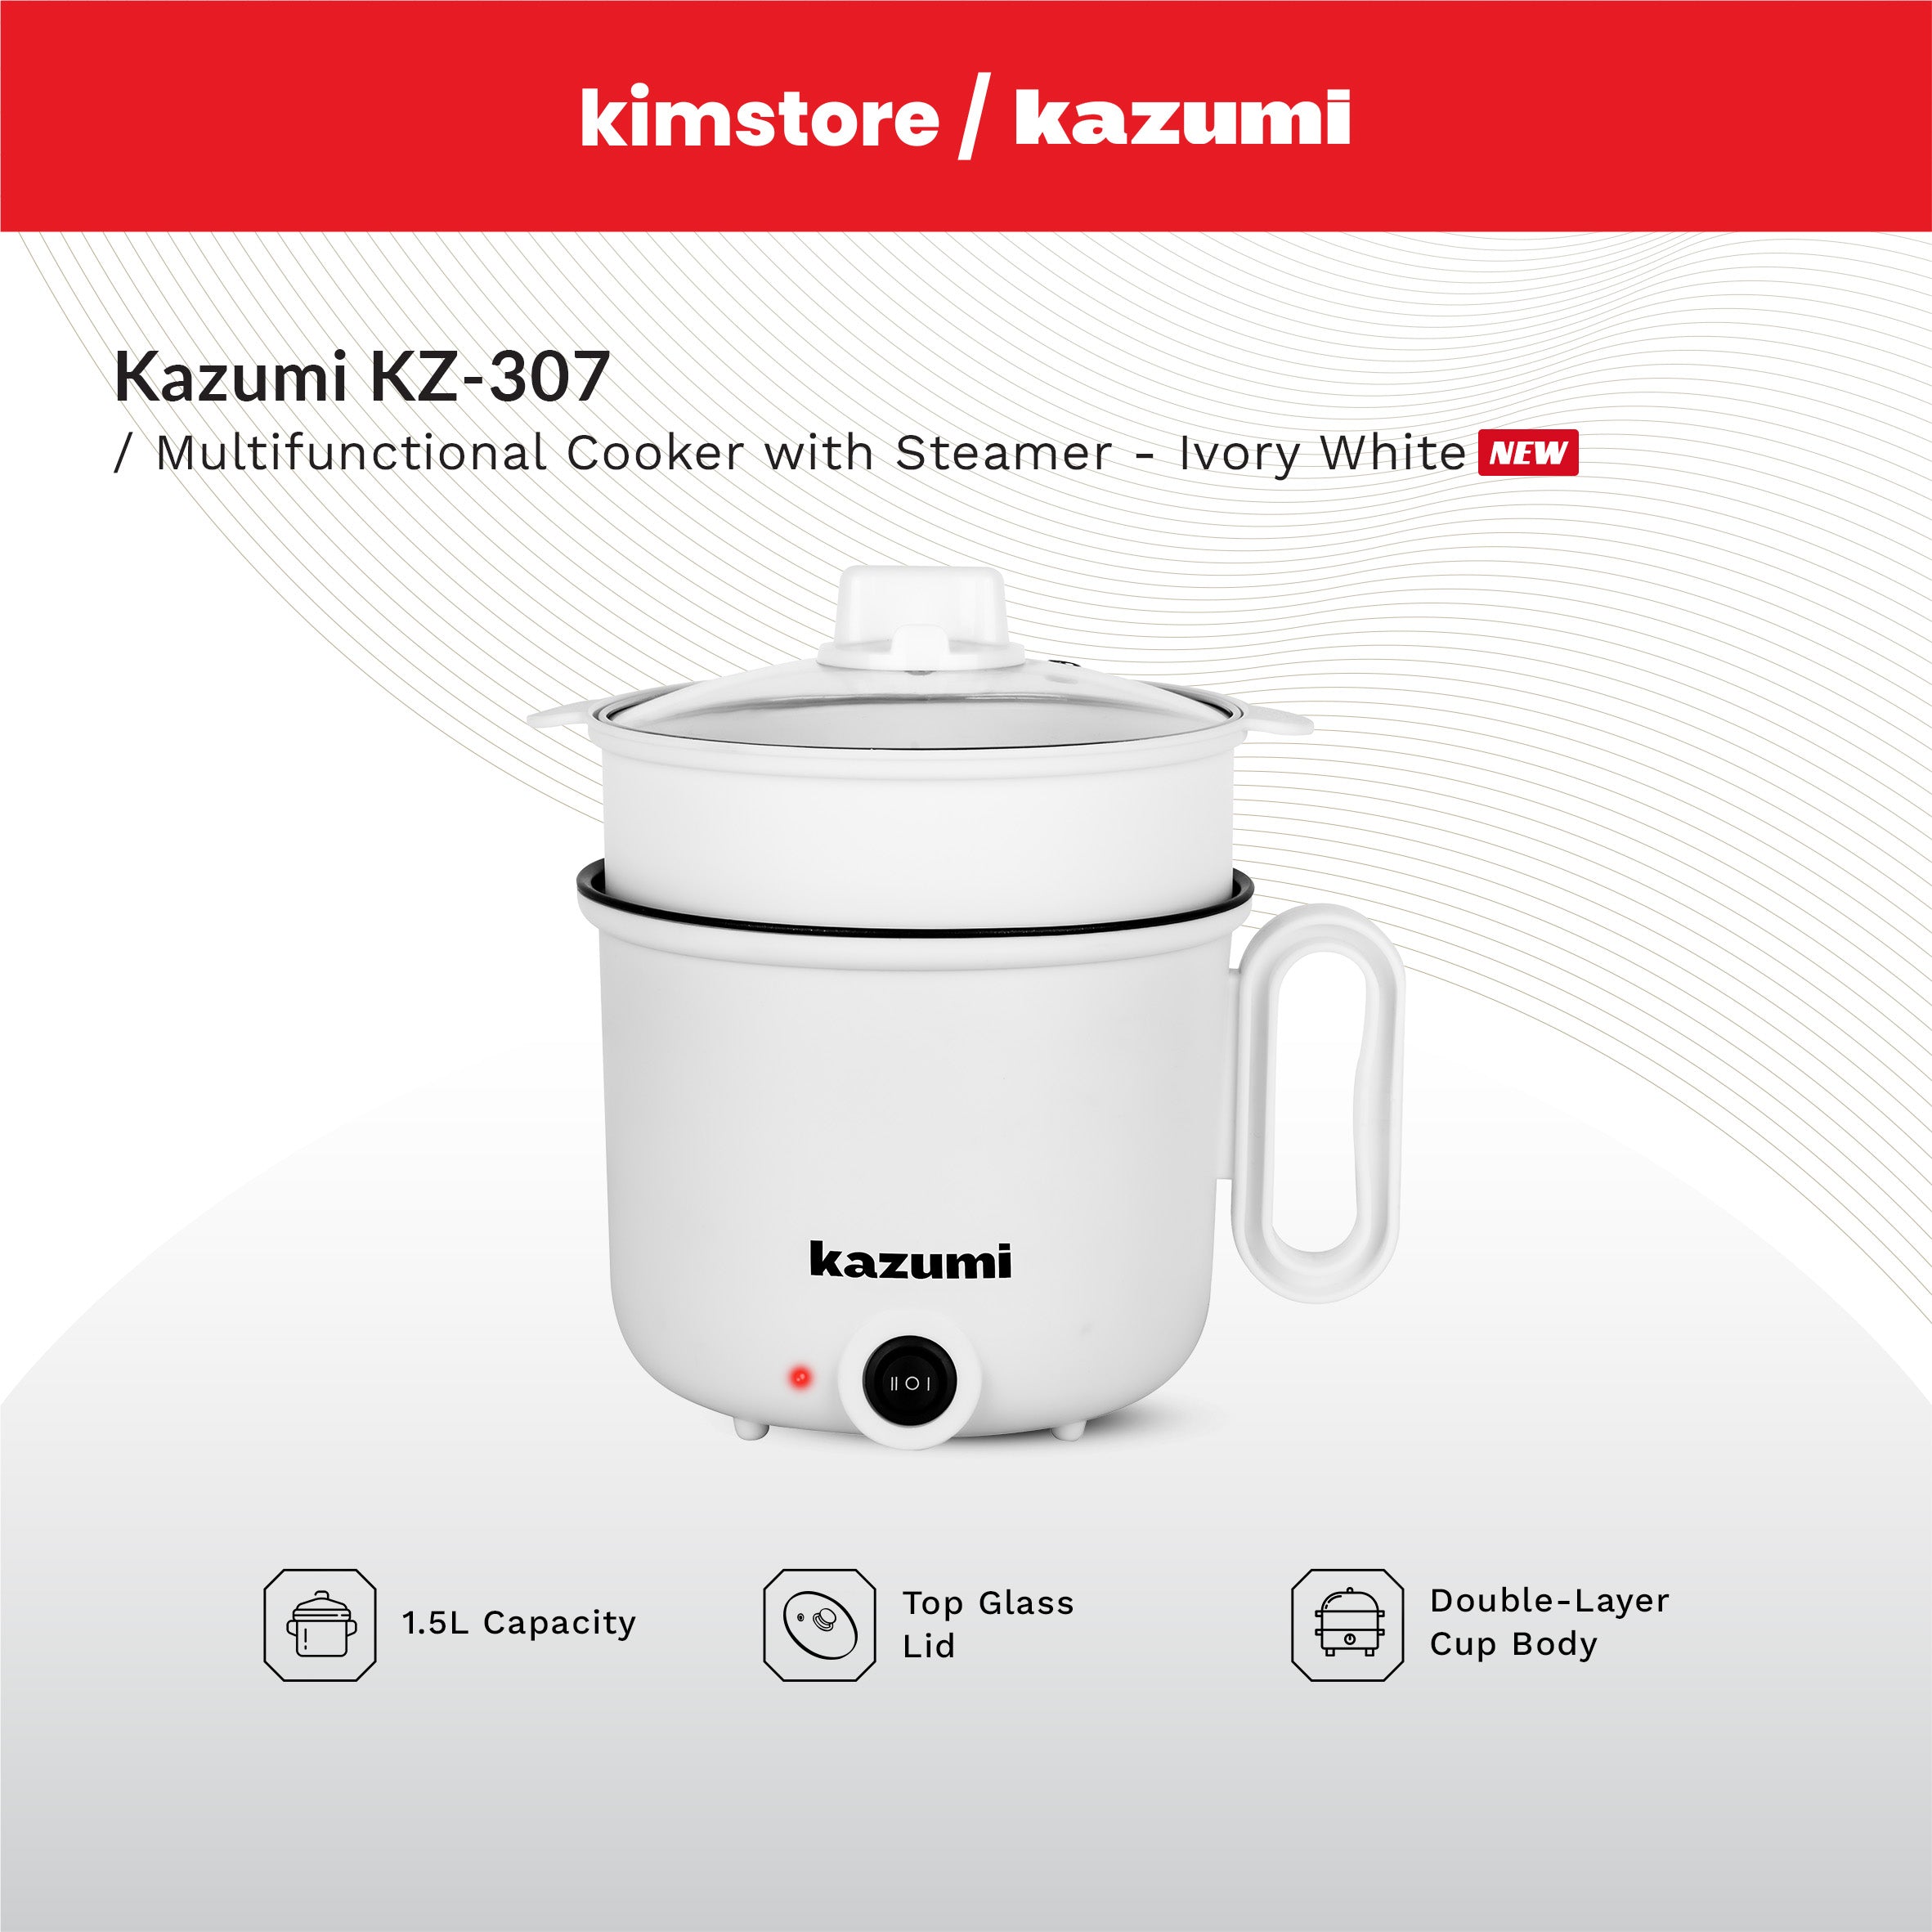 Kazumi KZ-307 1.5L Multifunctional Cooker with Steamer